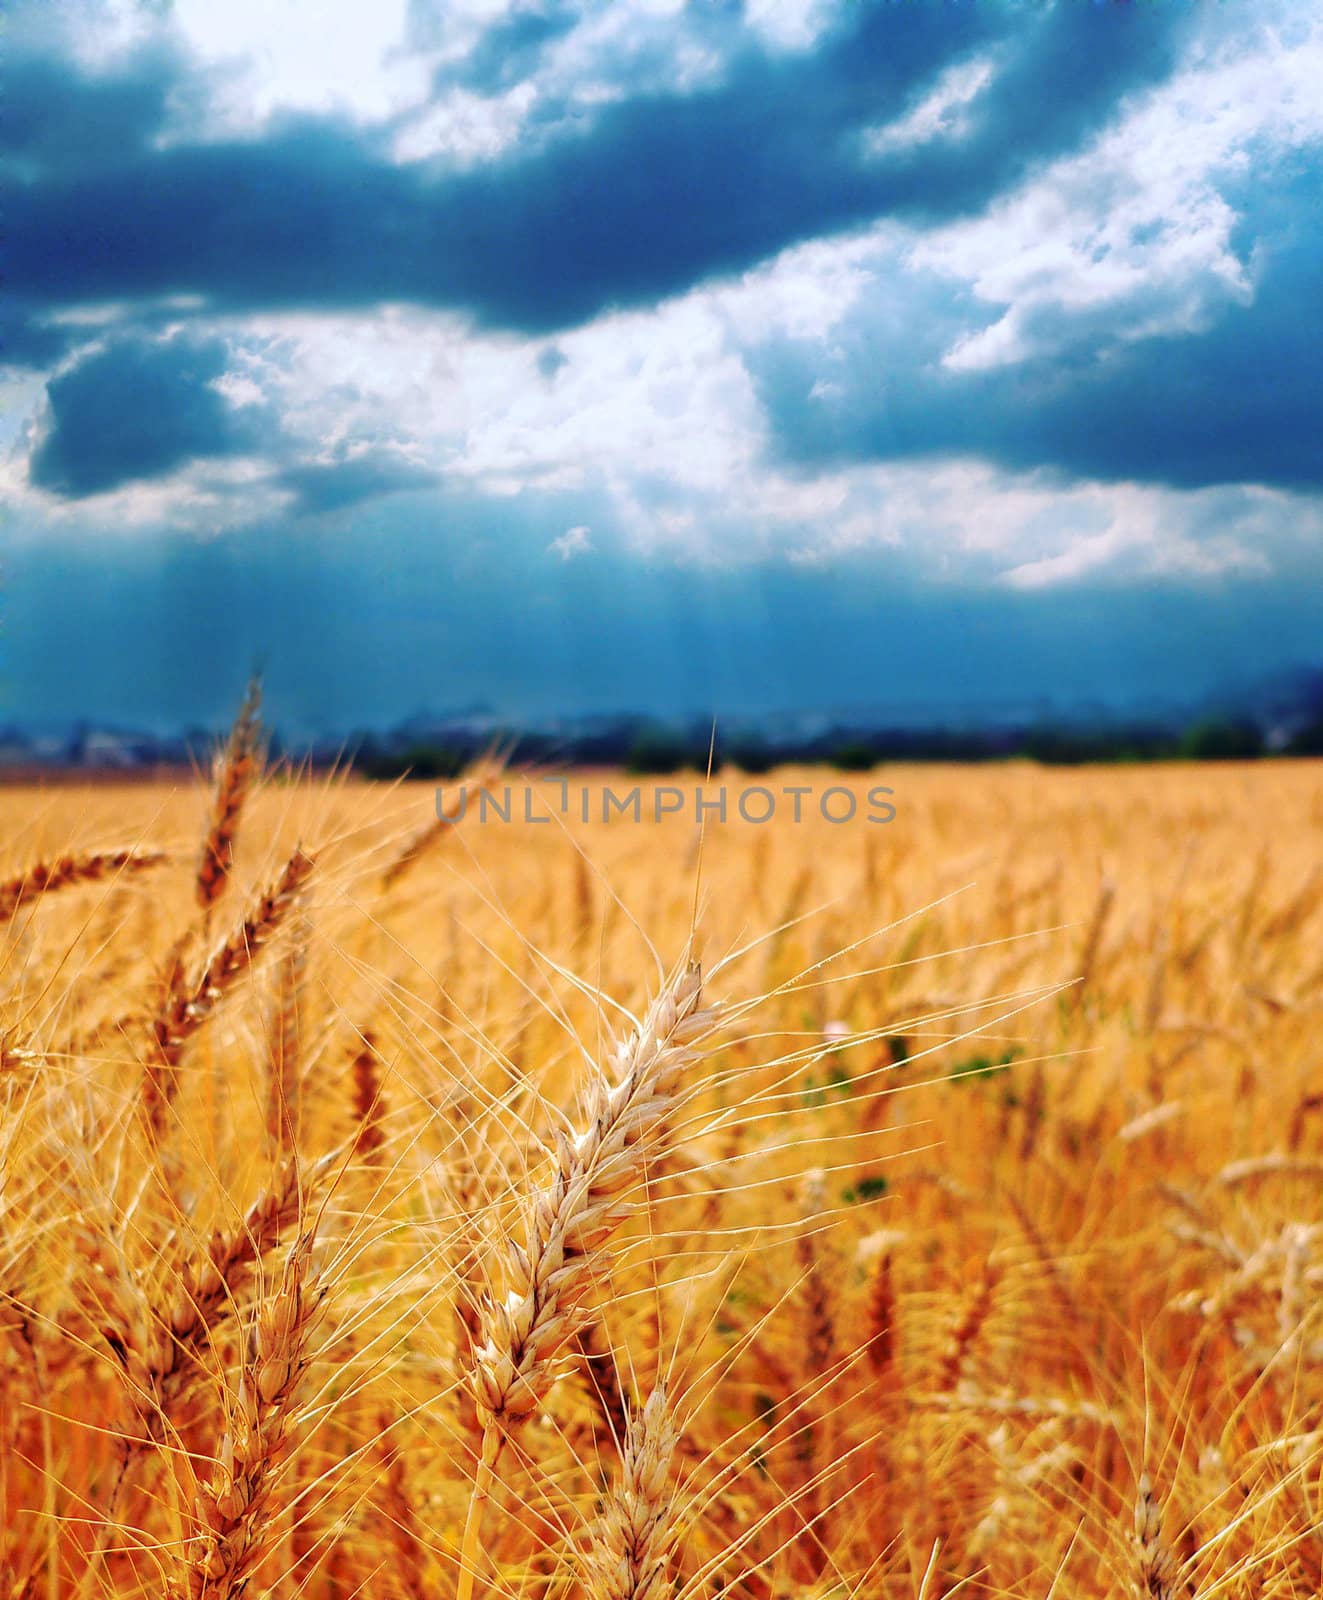 Wheat ready for harvest growing in a farm field under blue sky by mozzyb